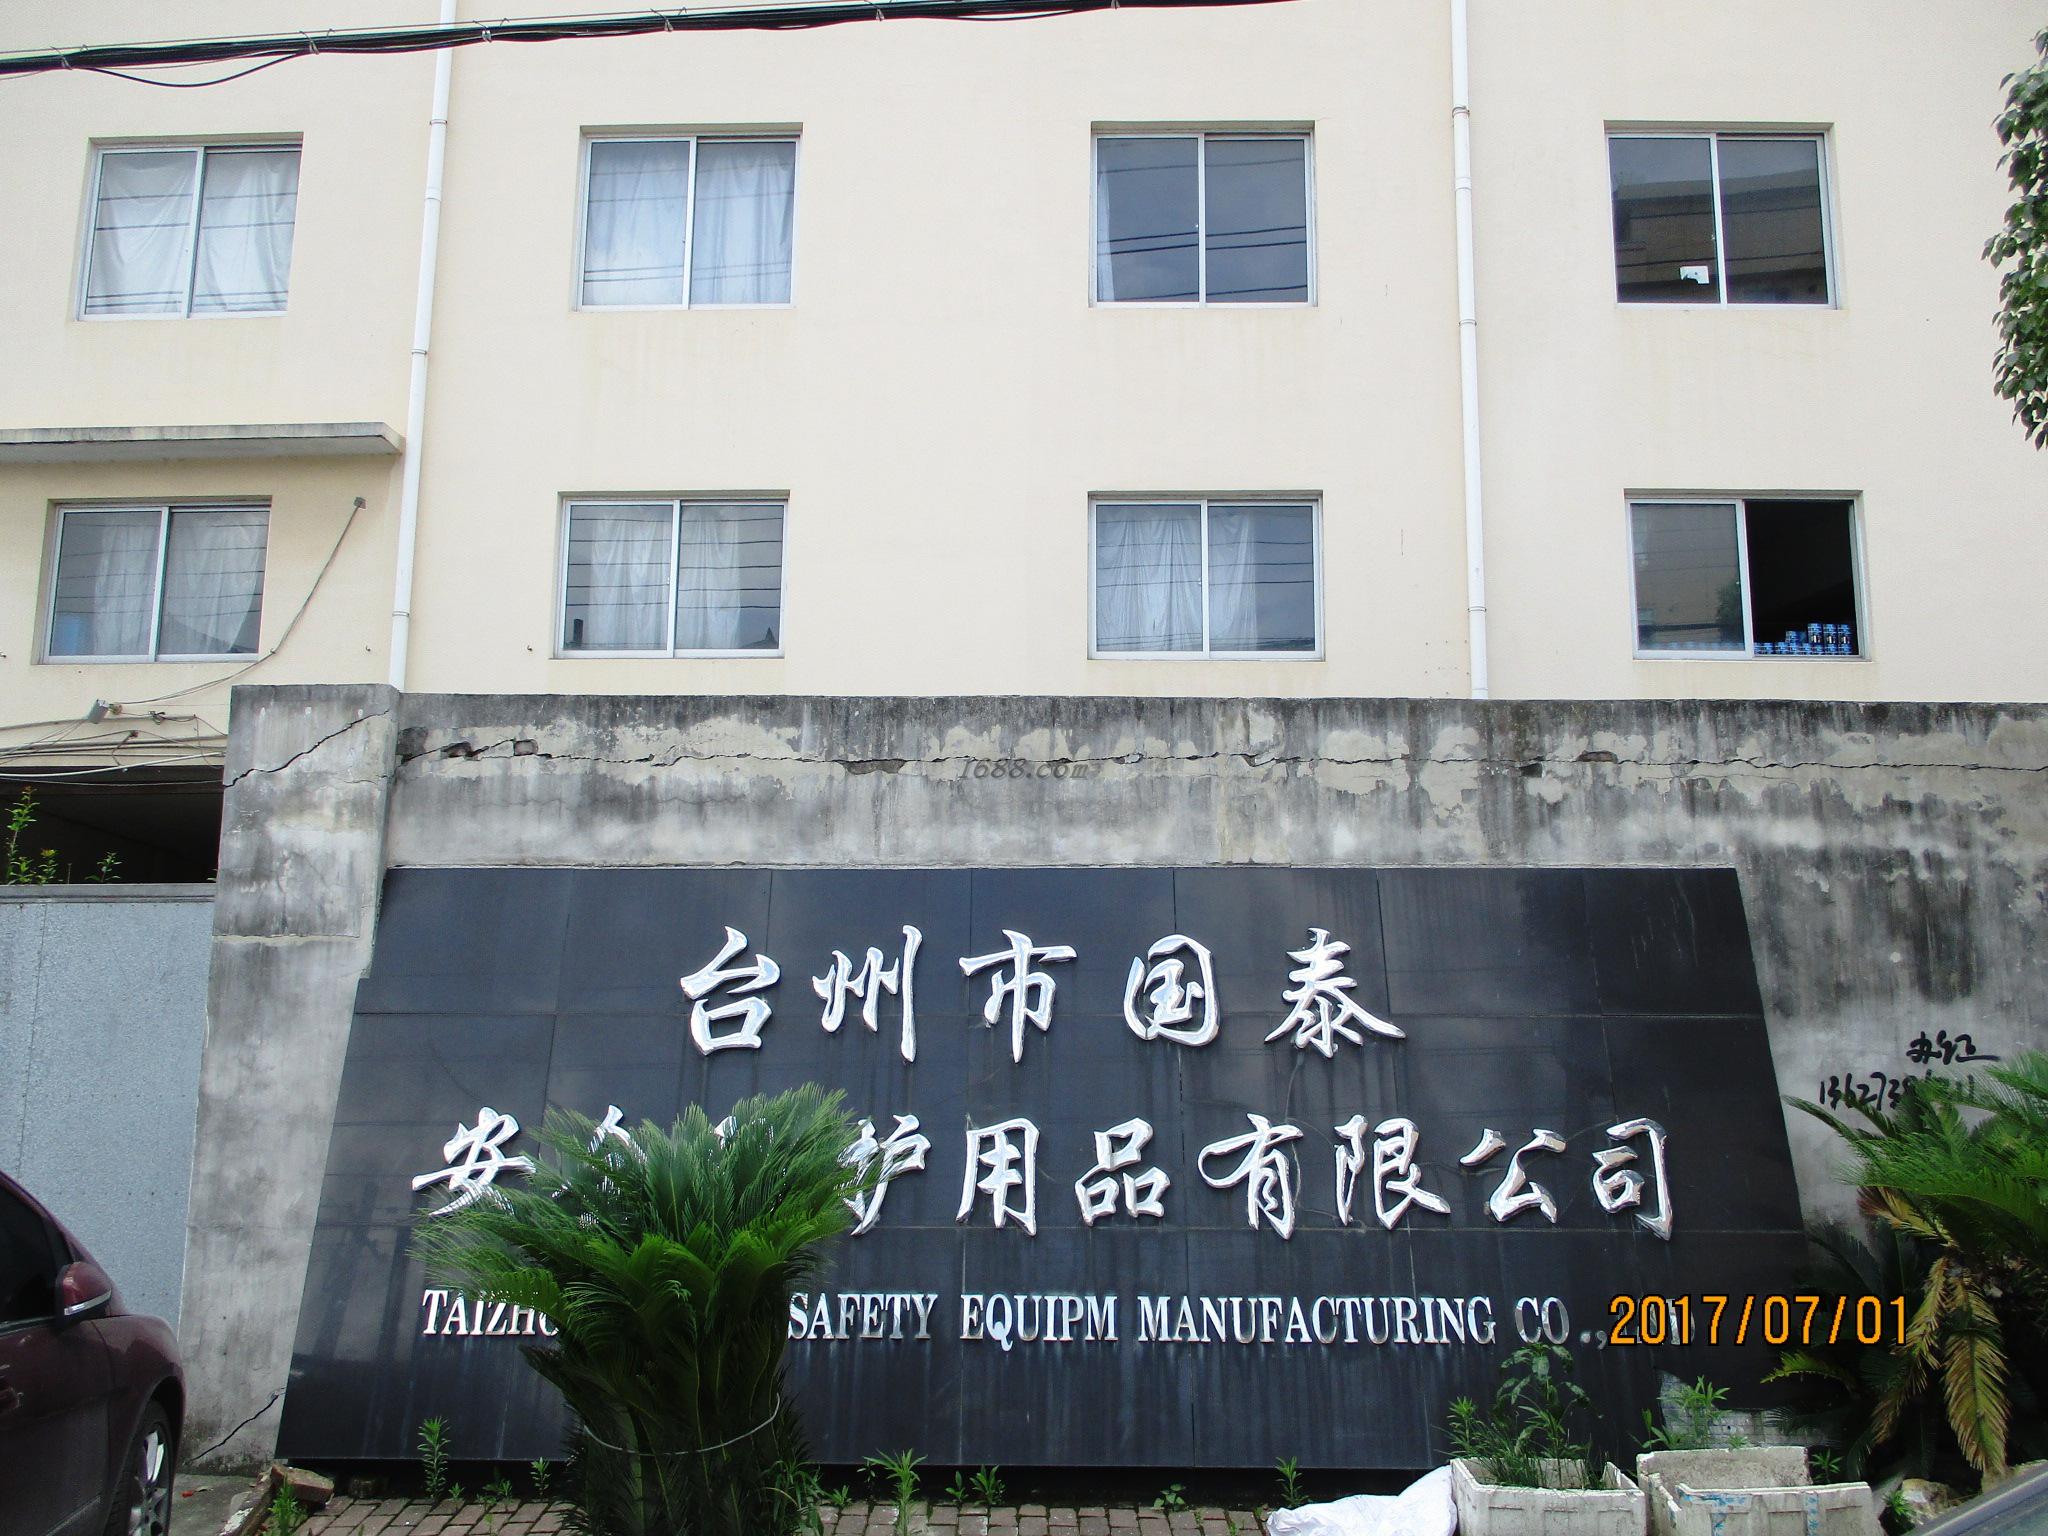 Taizhou Guotai Safety Equipm Manufacturing Co., Ltd.